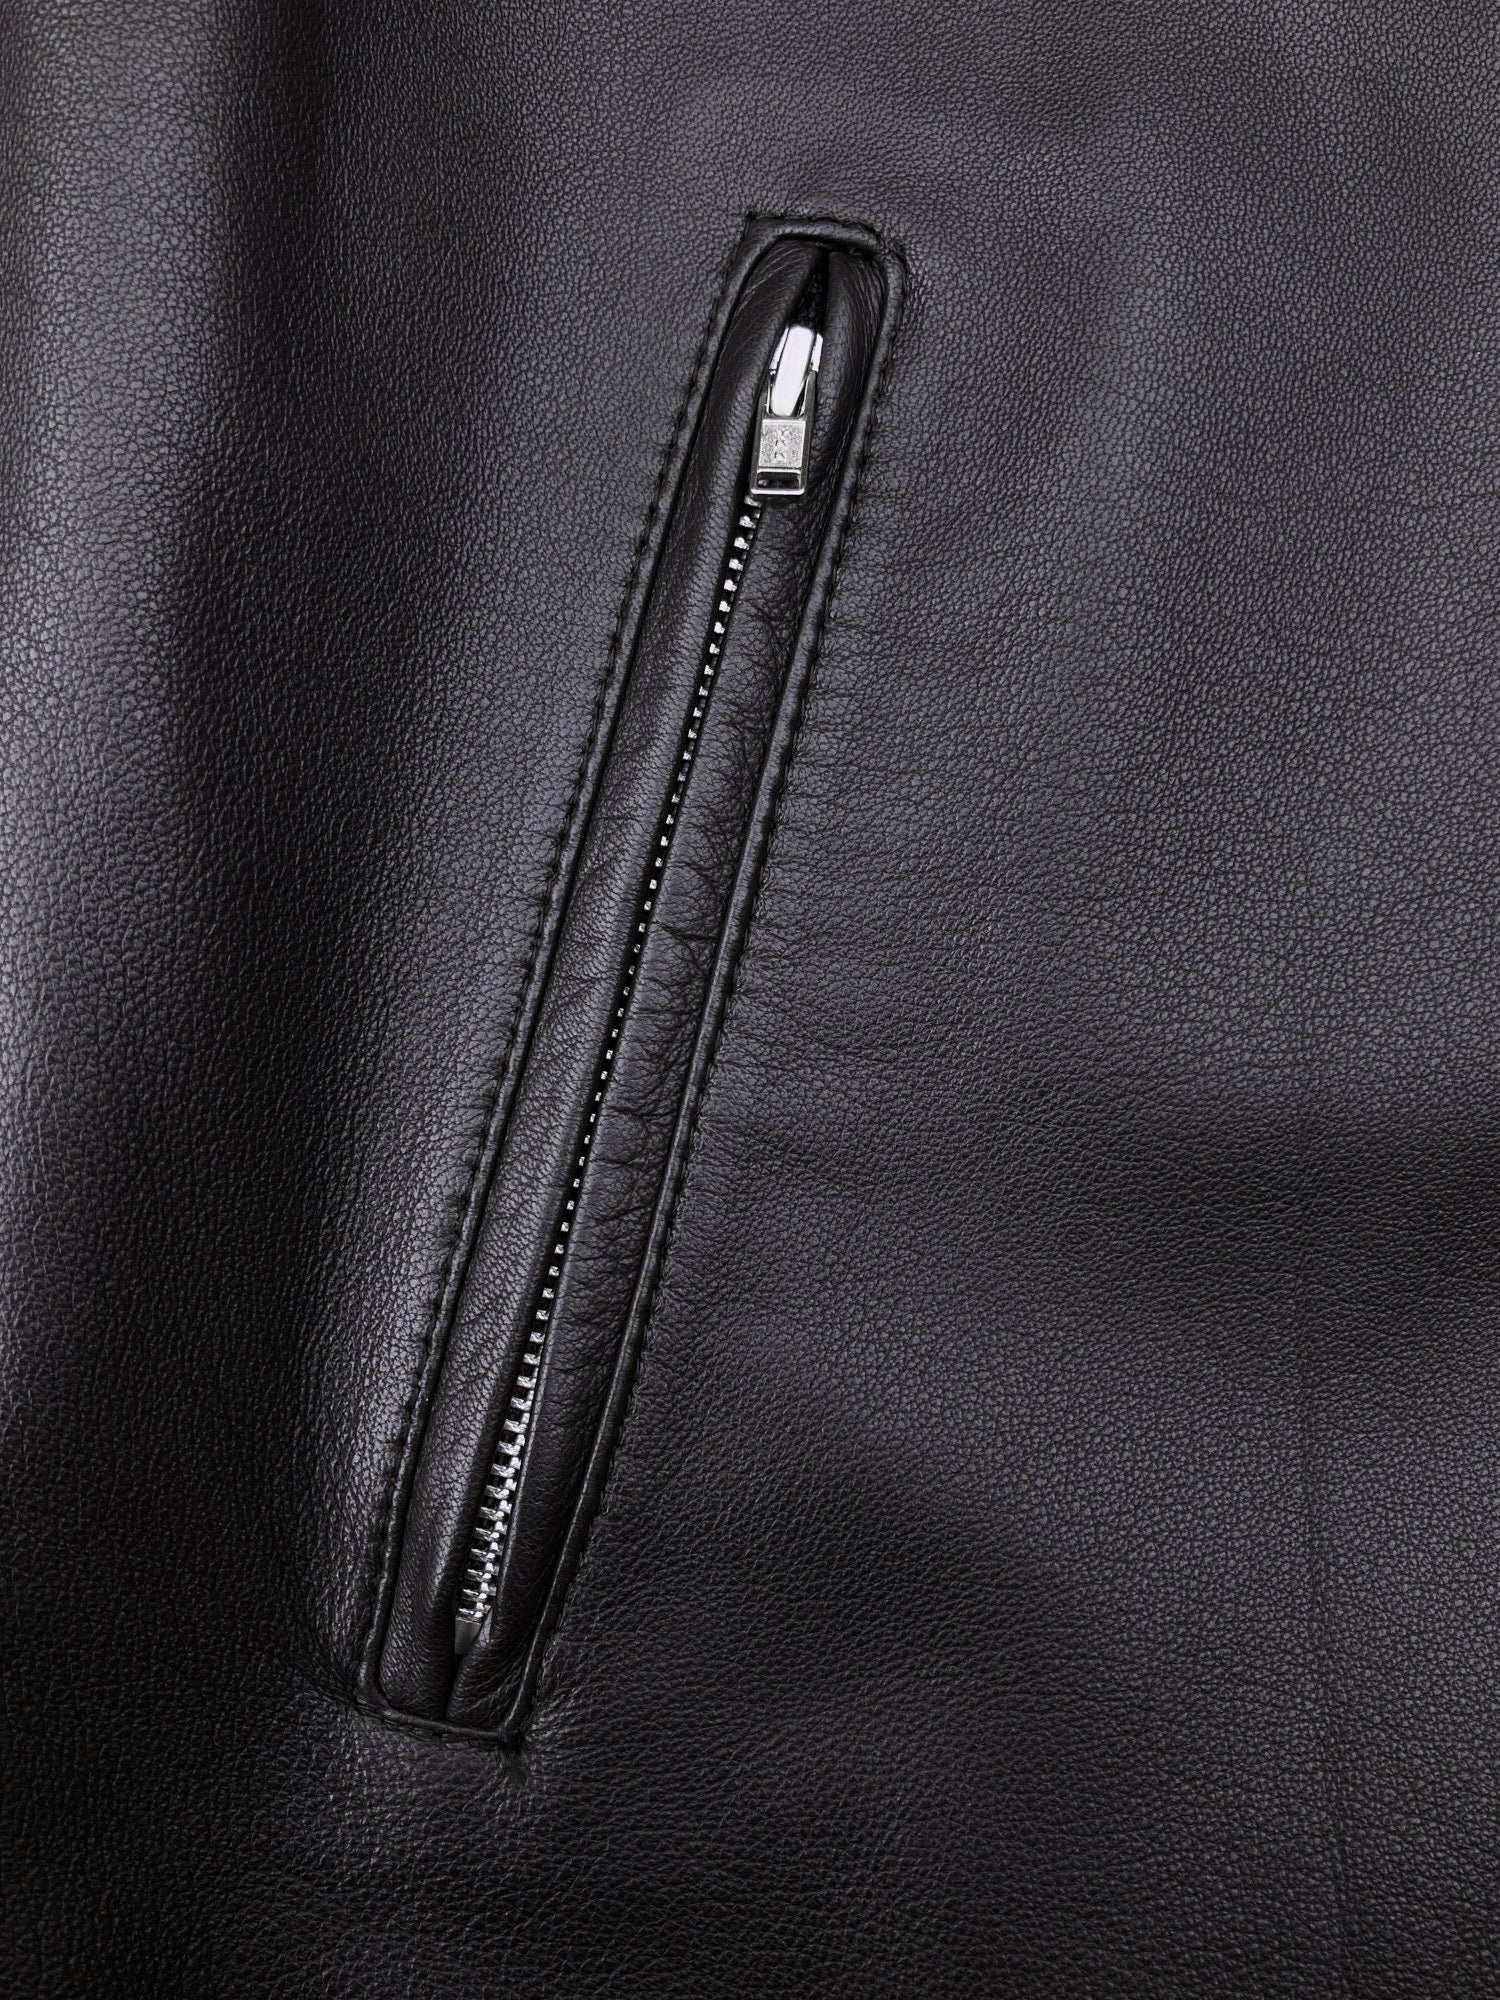 Portfolio by Michael Kors dark brown sheepskin leather zipped coat - size 40